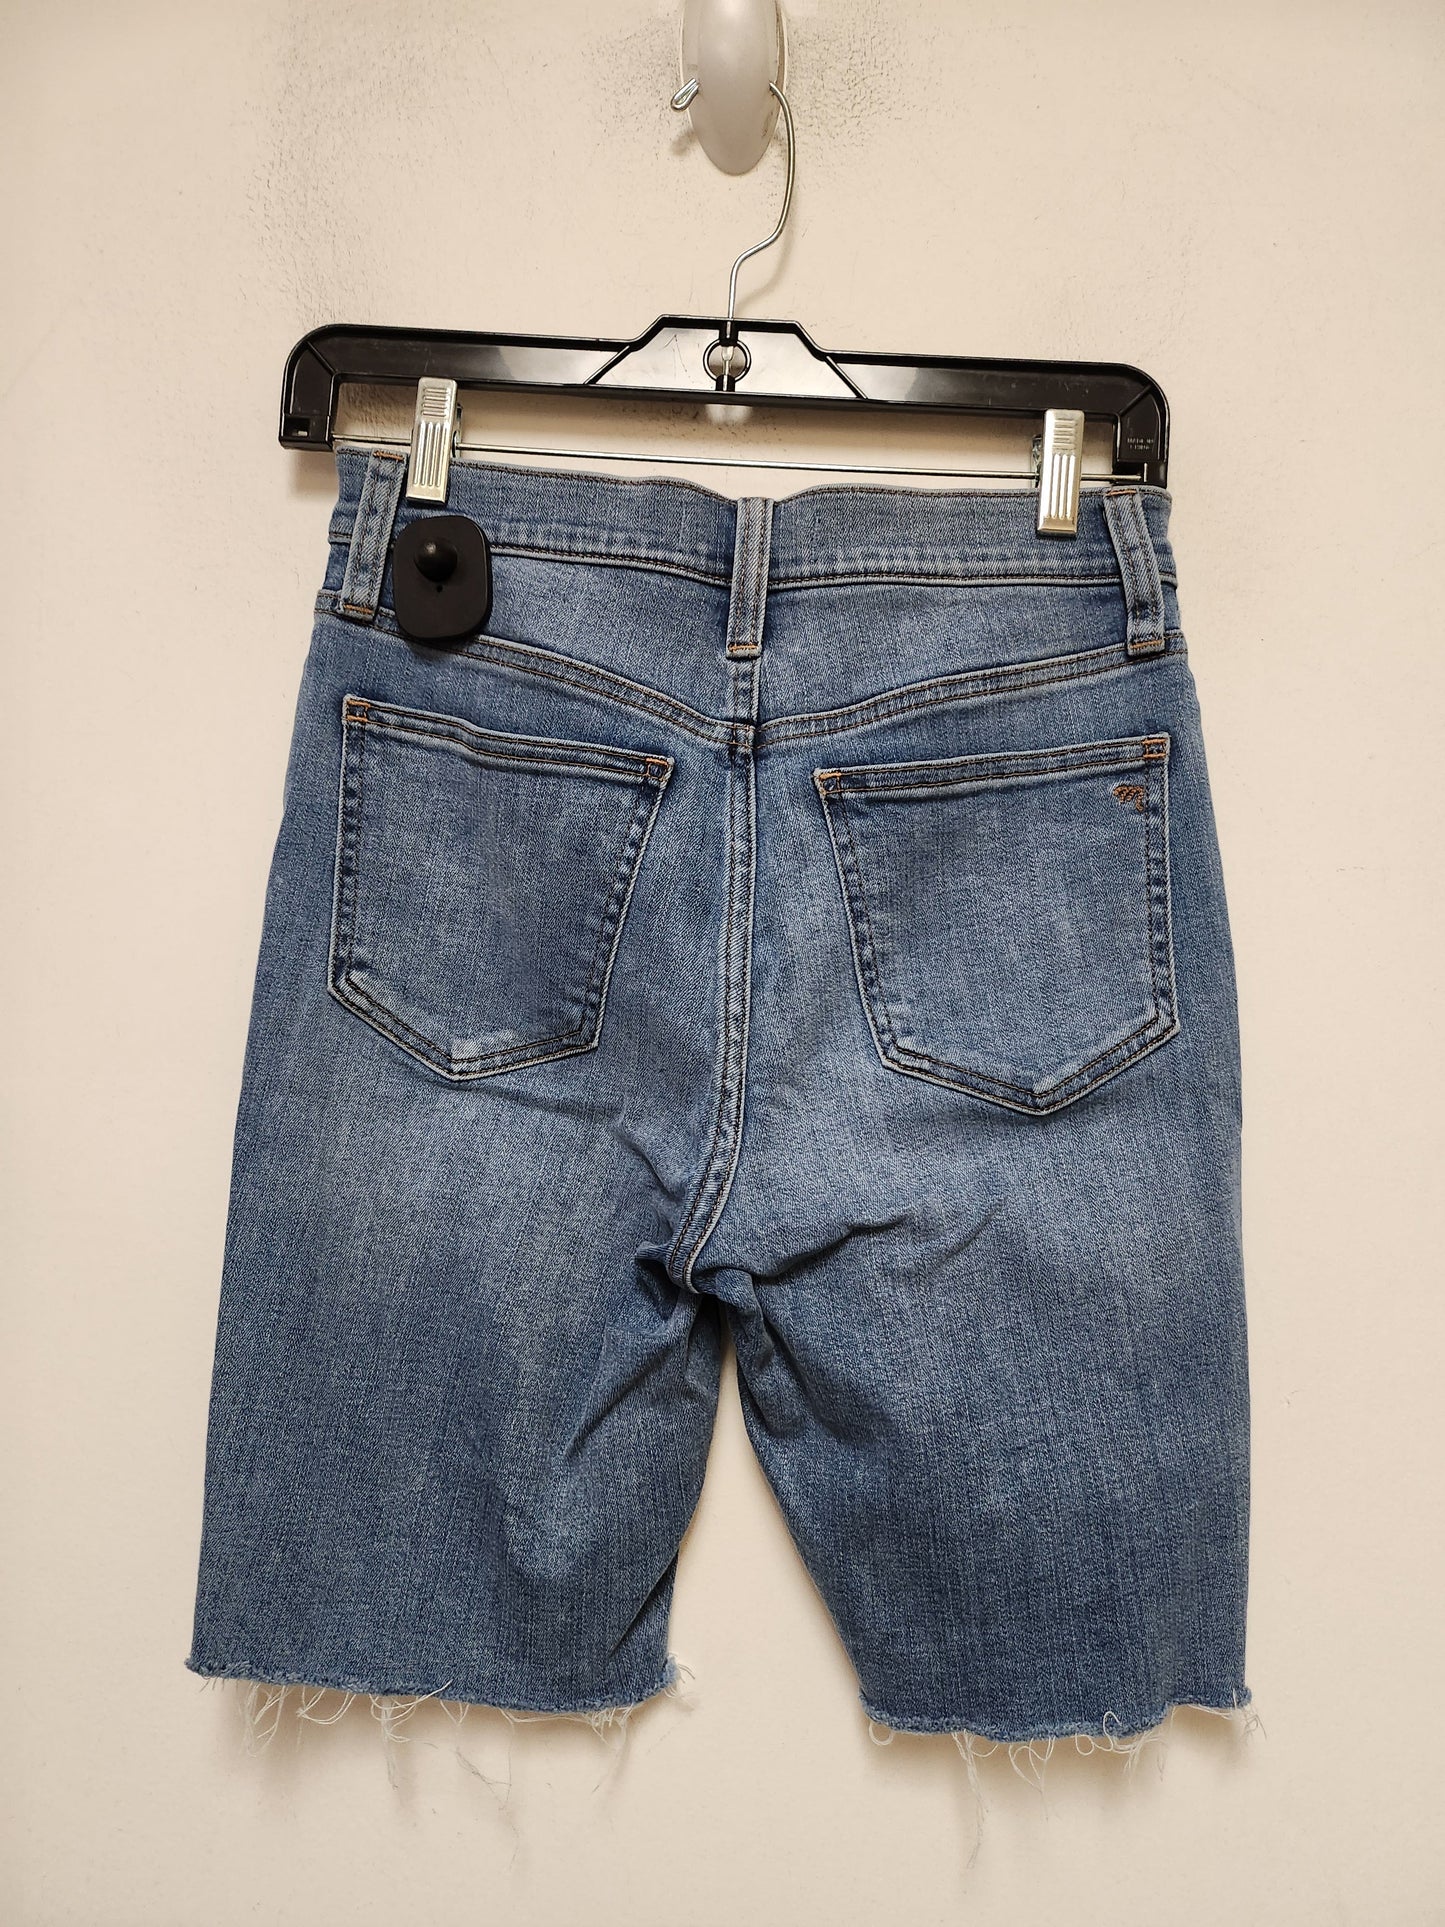 Blue Denim Shorts Madewell, Size 4